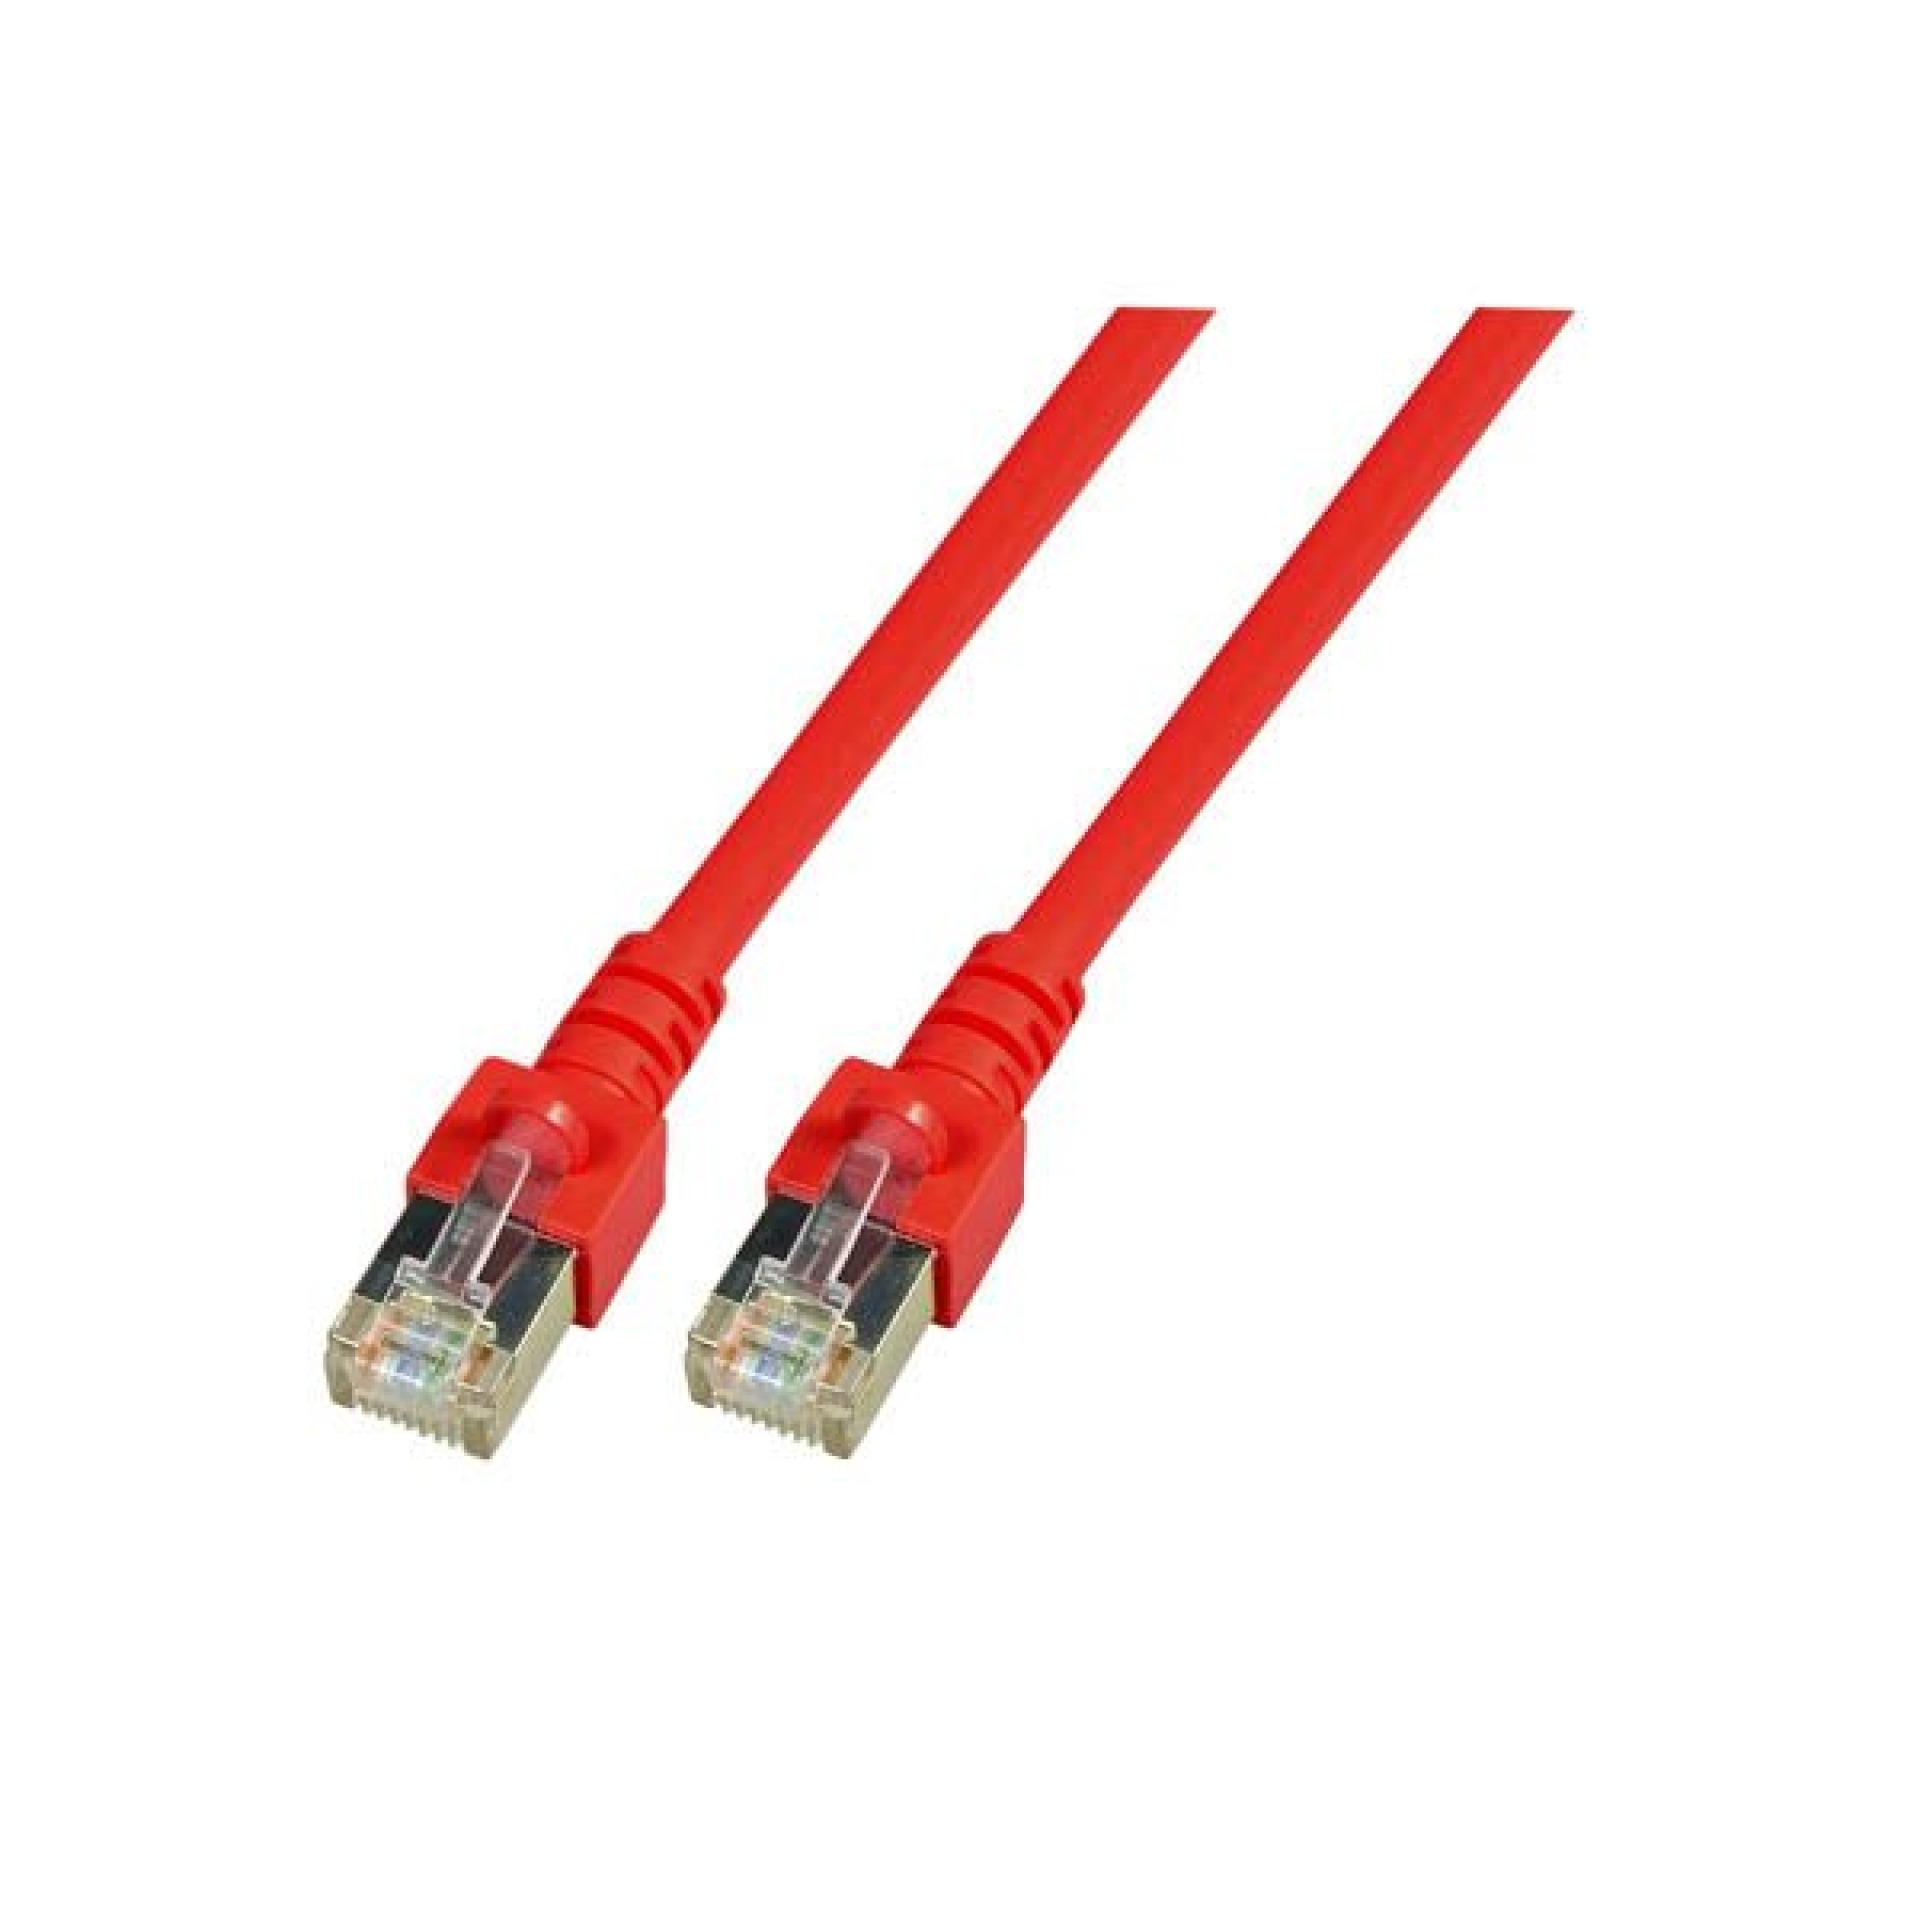 RJ45 Patch cable SF/UTP, Cat.5e, PVC, CCA, 1m, red